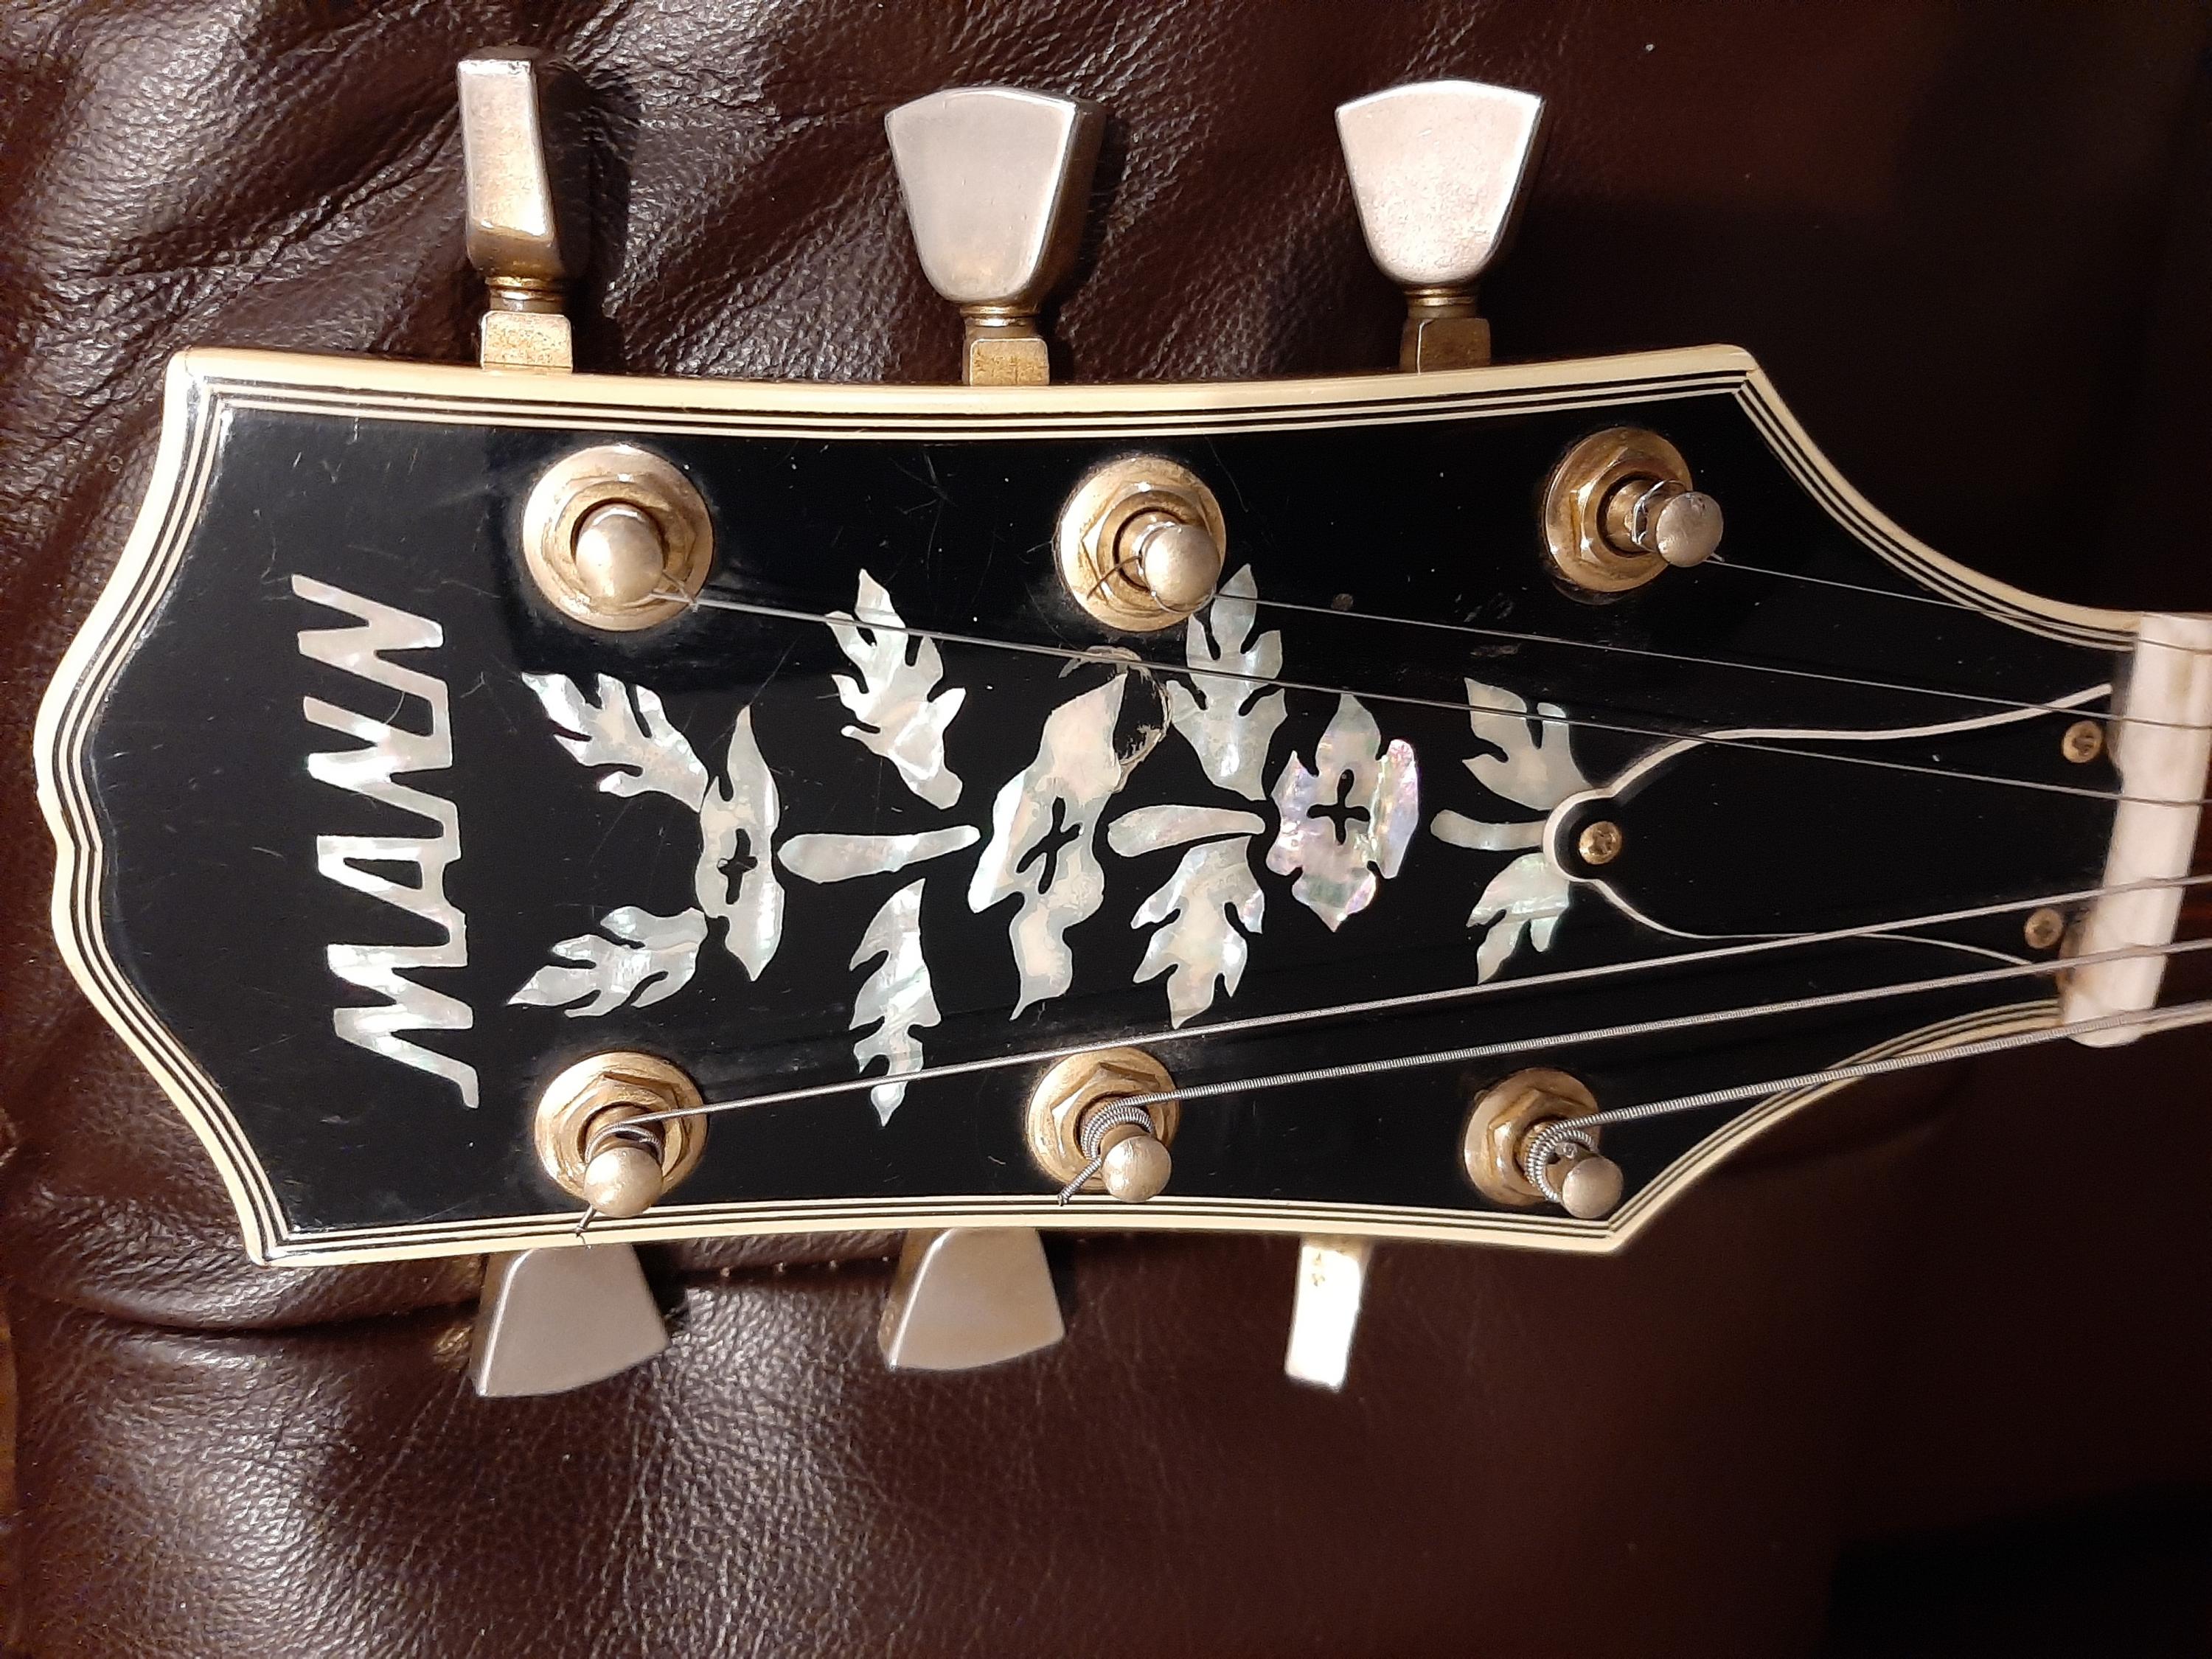 Japanese MANN Howard Roberts guitar (Ibanez 2453 ?)-20210123_205324-jpg